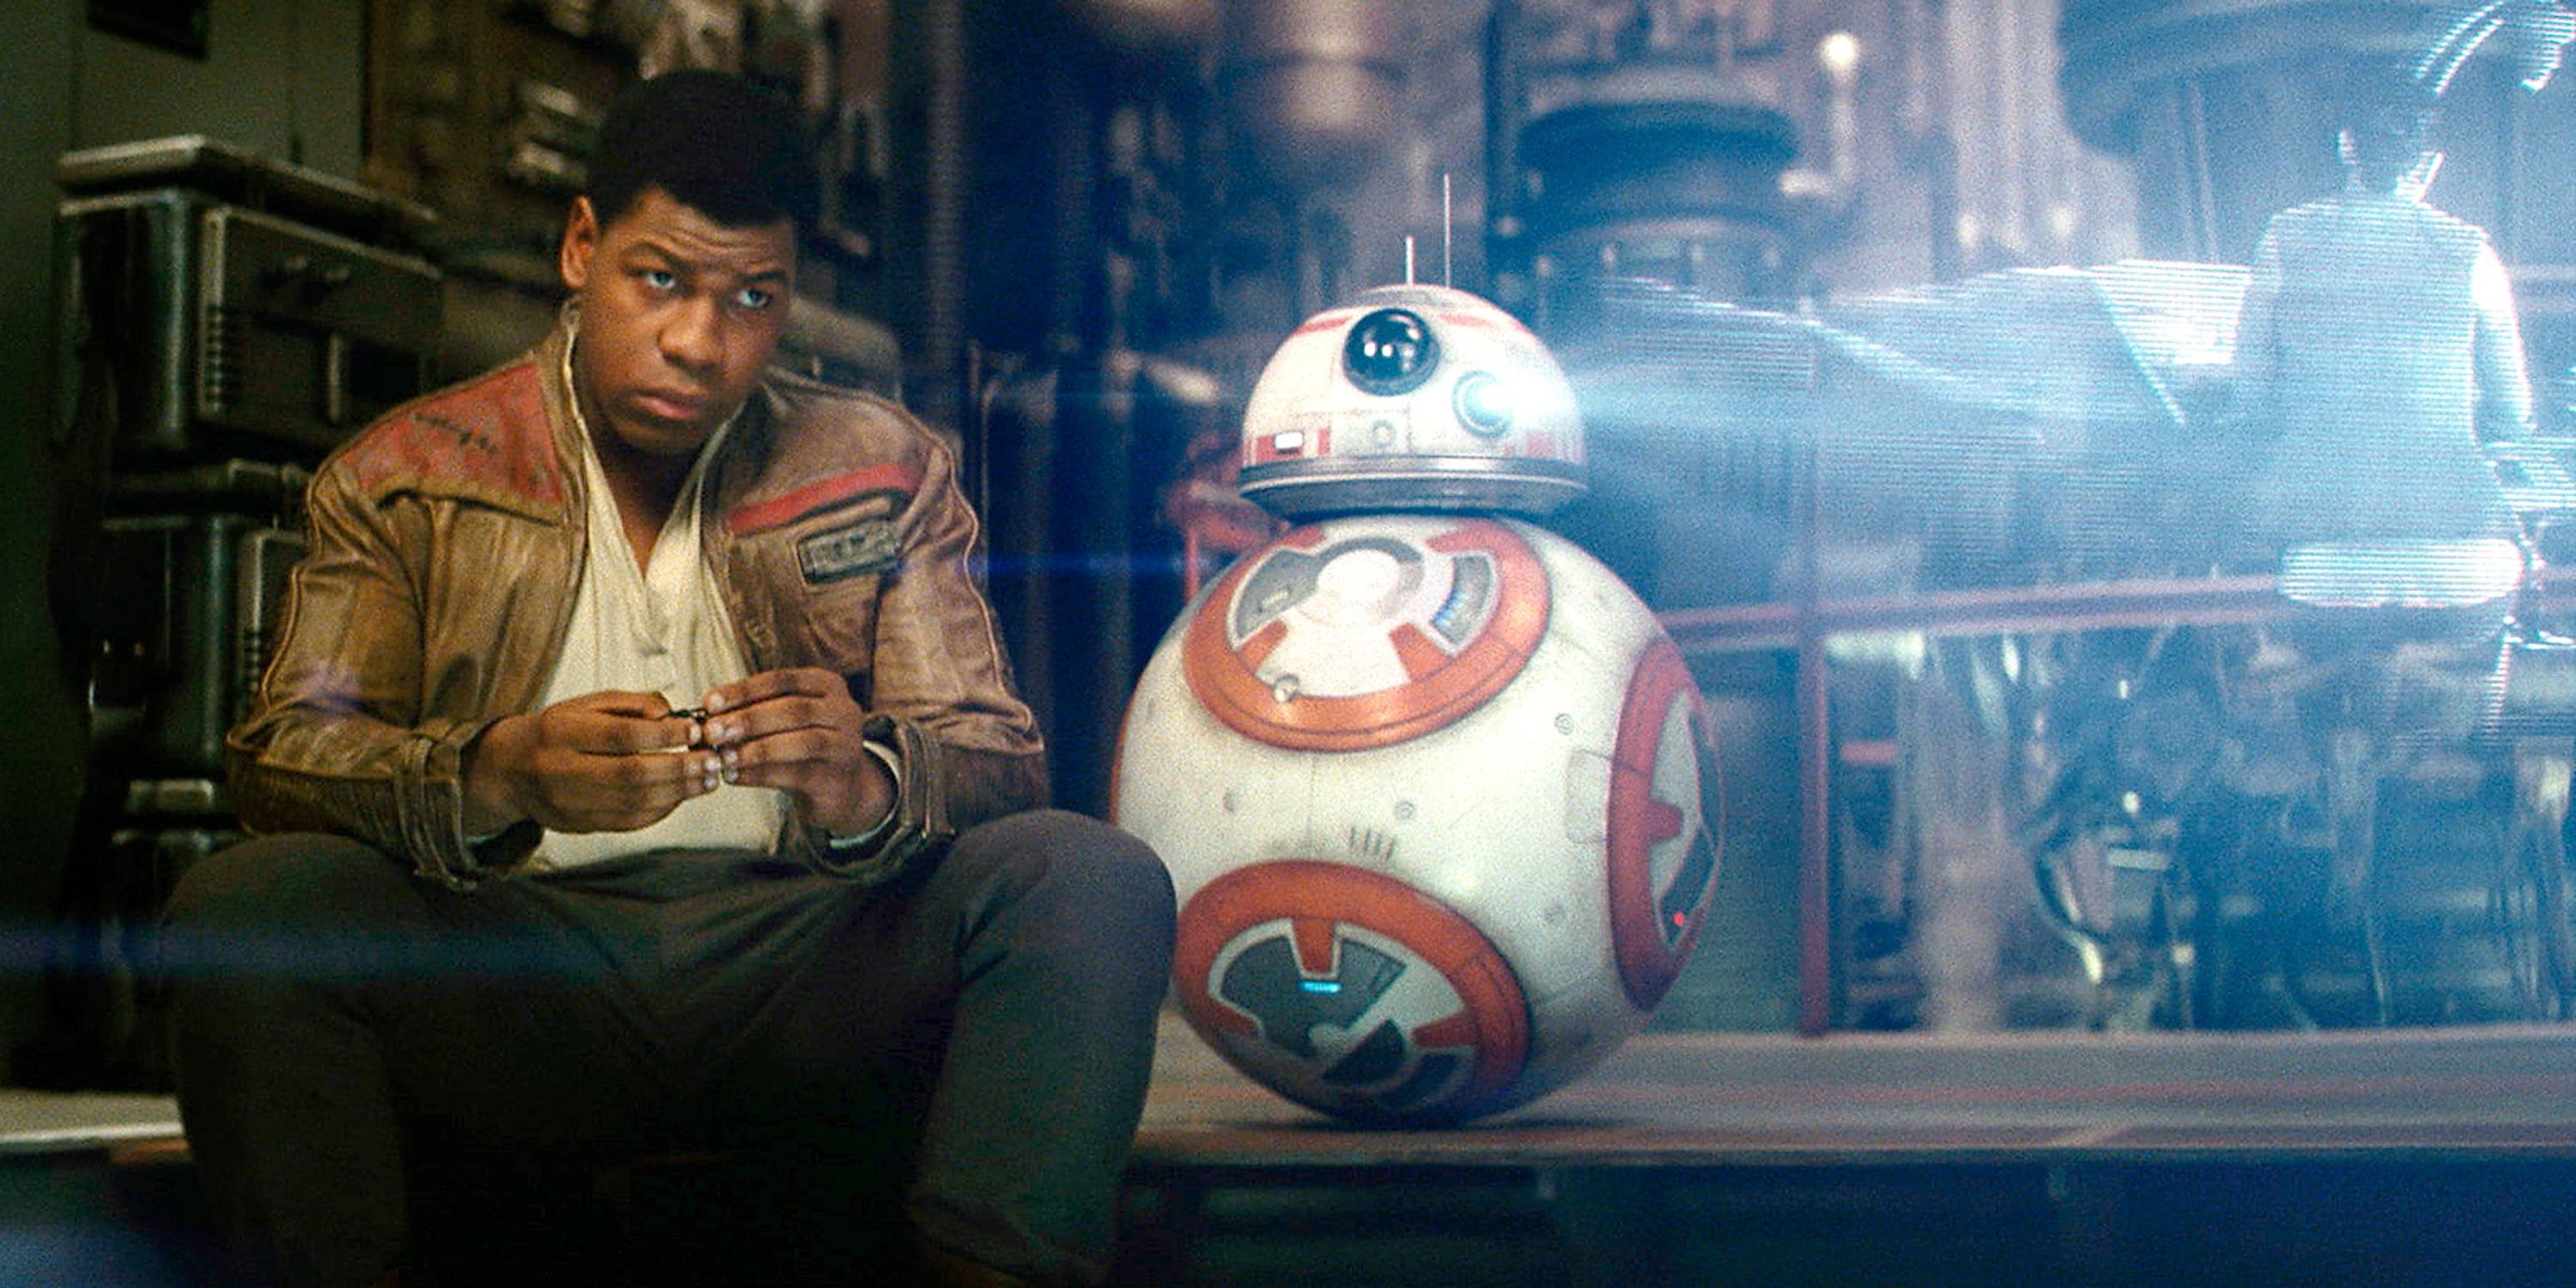 Finn watching BB-8 hologram in Star Wars: The Last Jedi